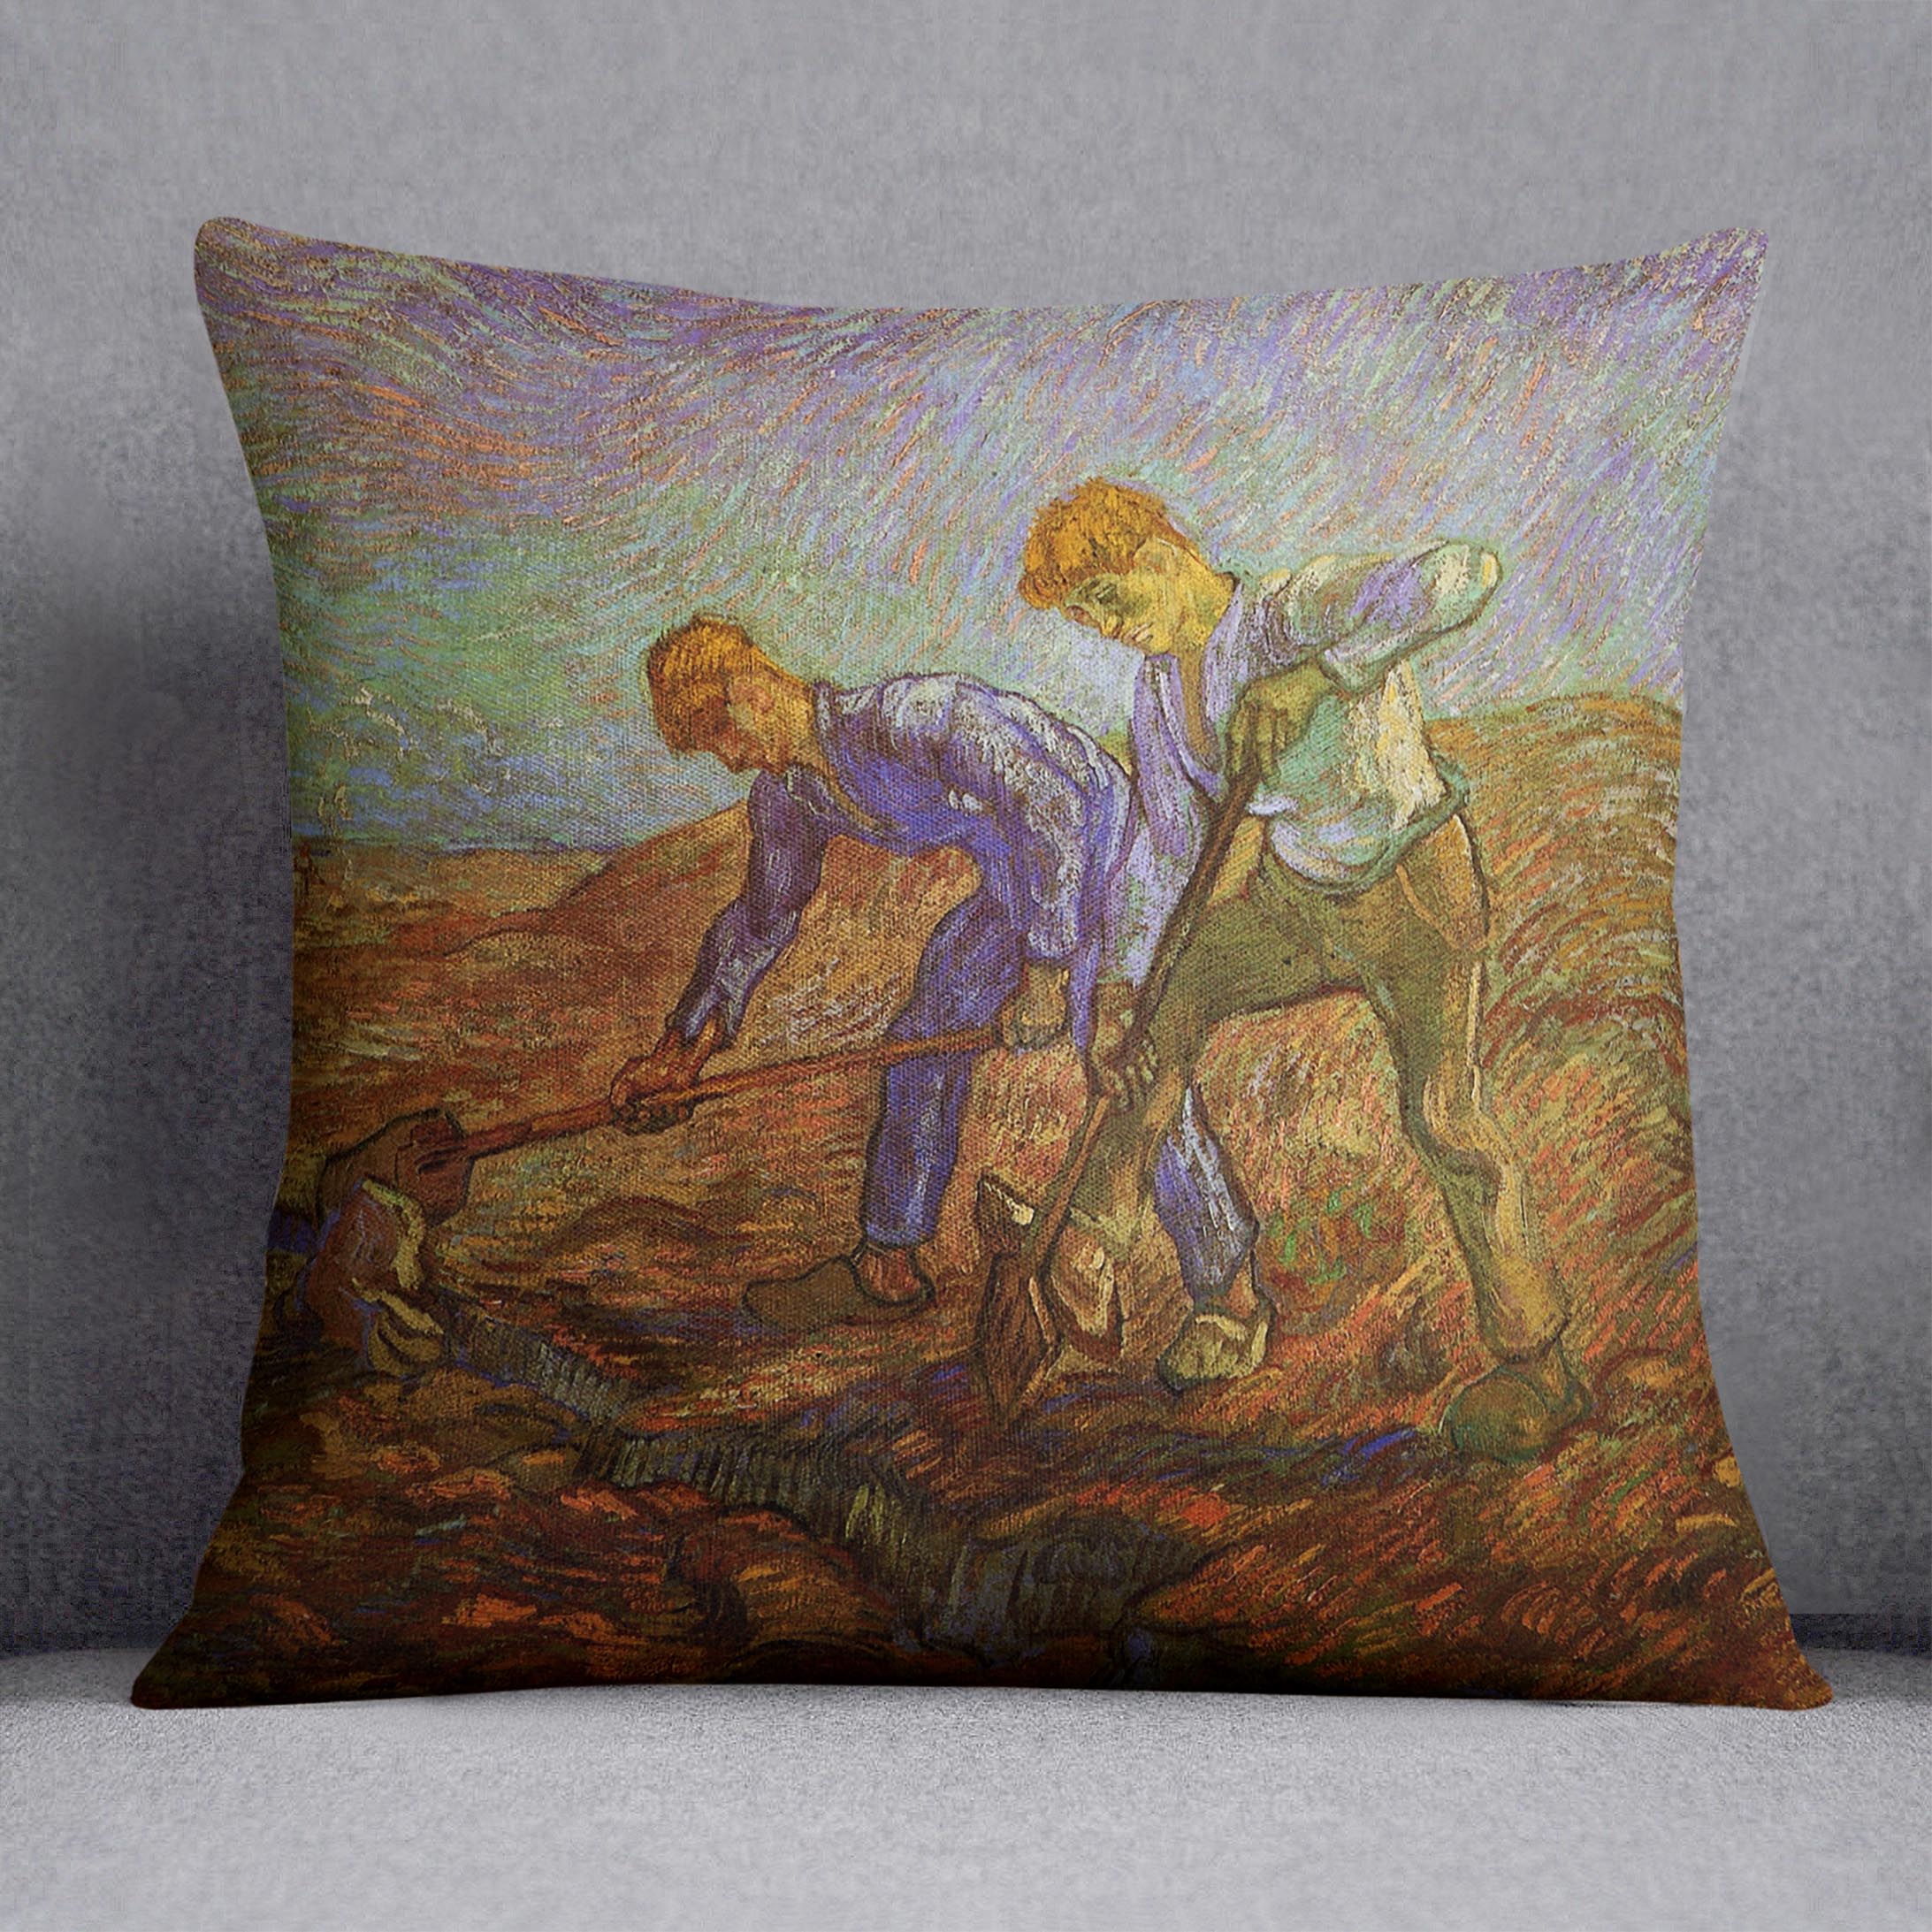 Two Peasants Digging by Van Gogh Cushion